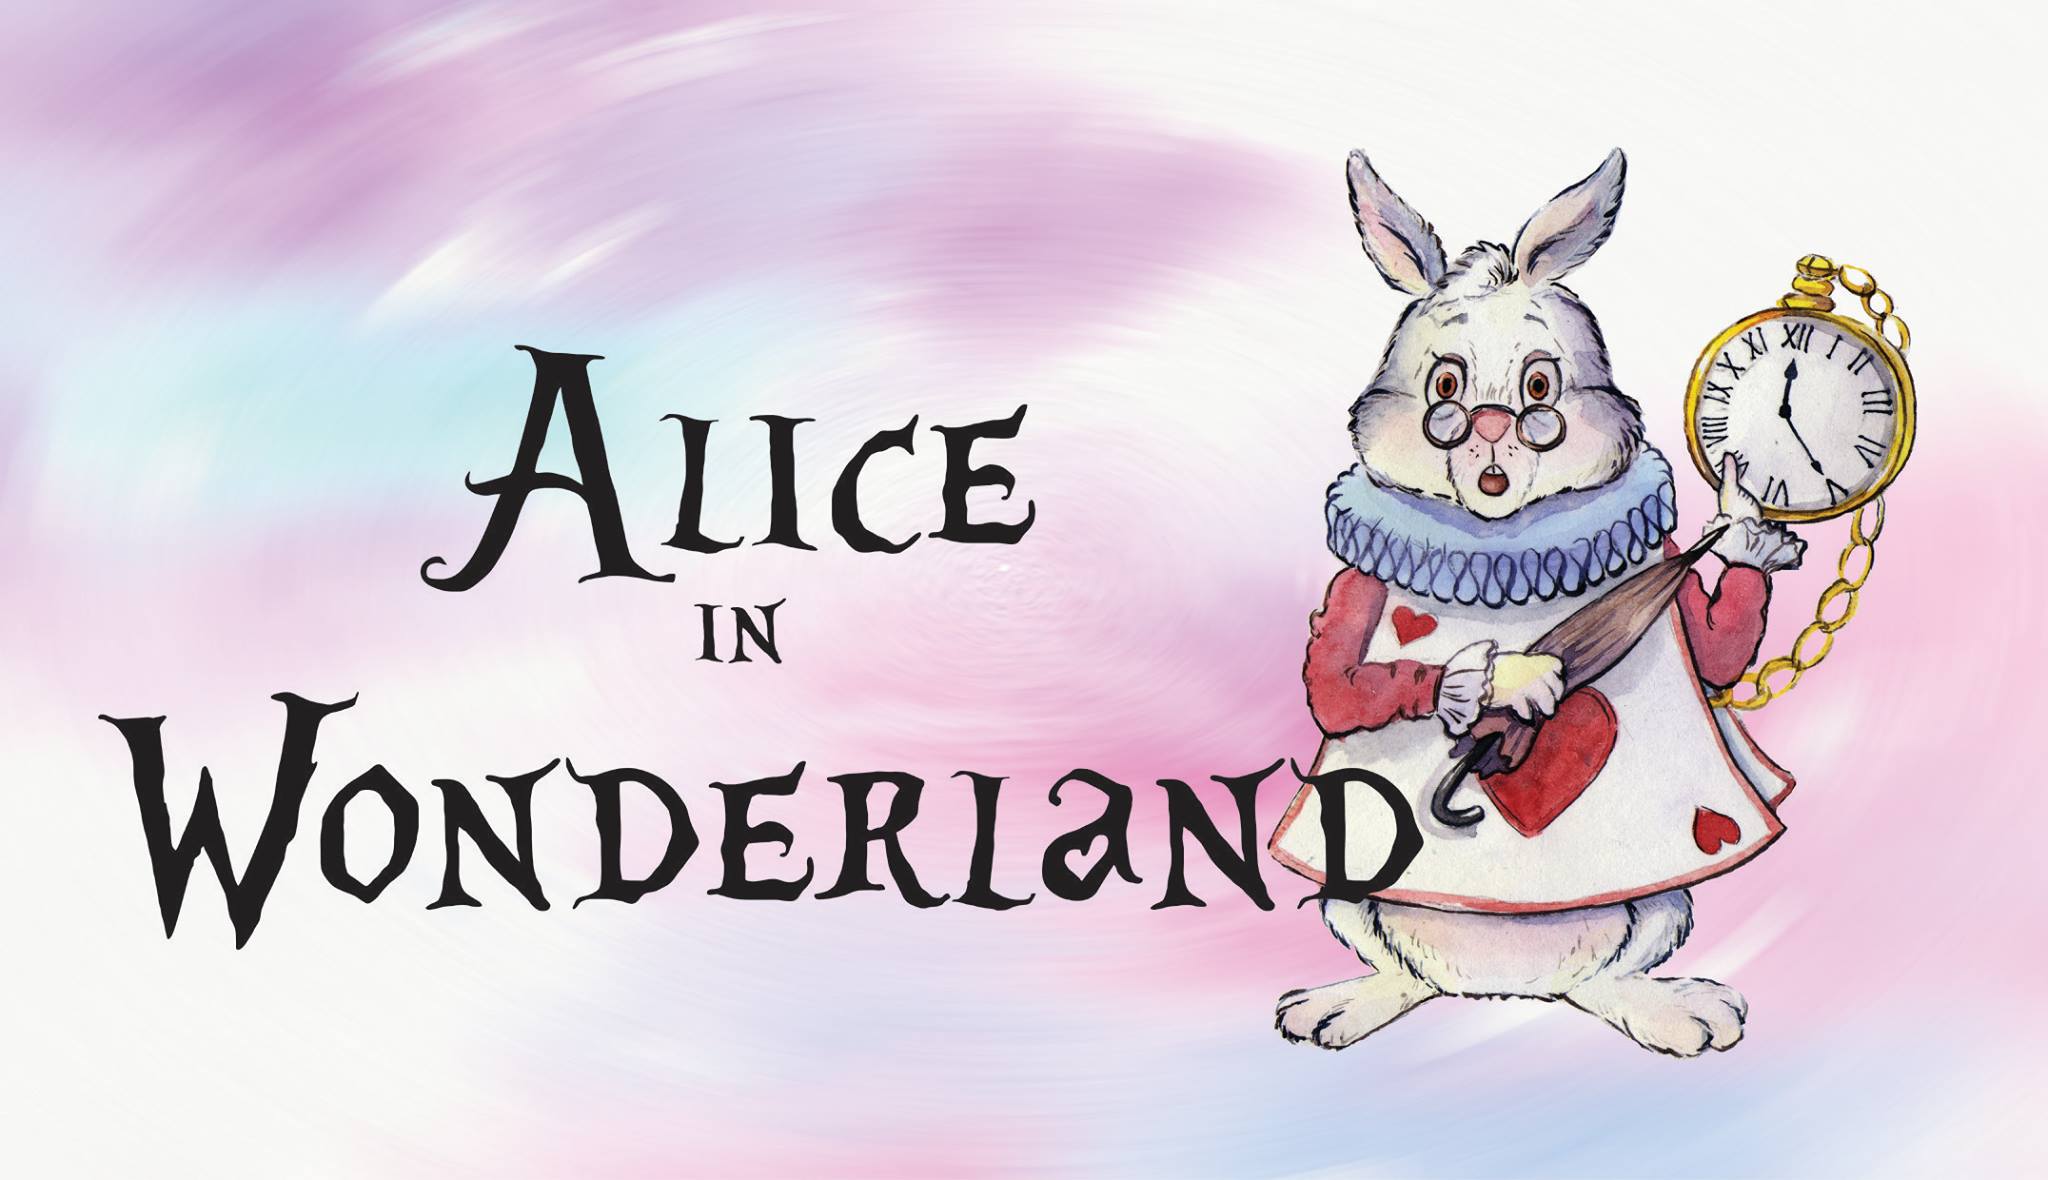 Alice in Wonderland Logo 4-2017